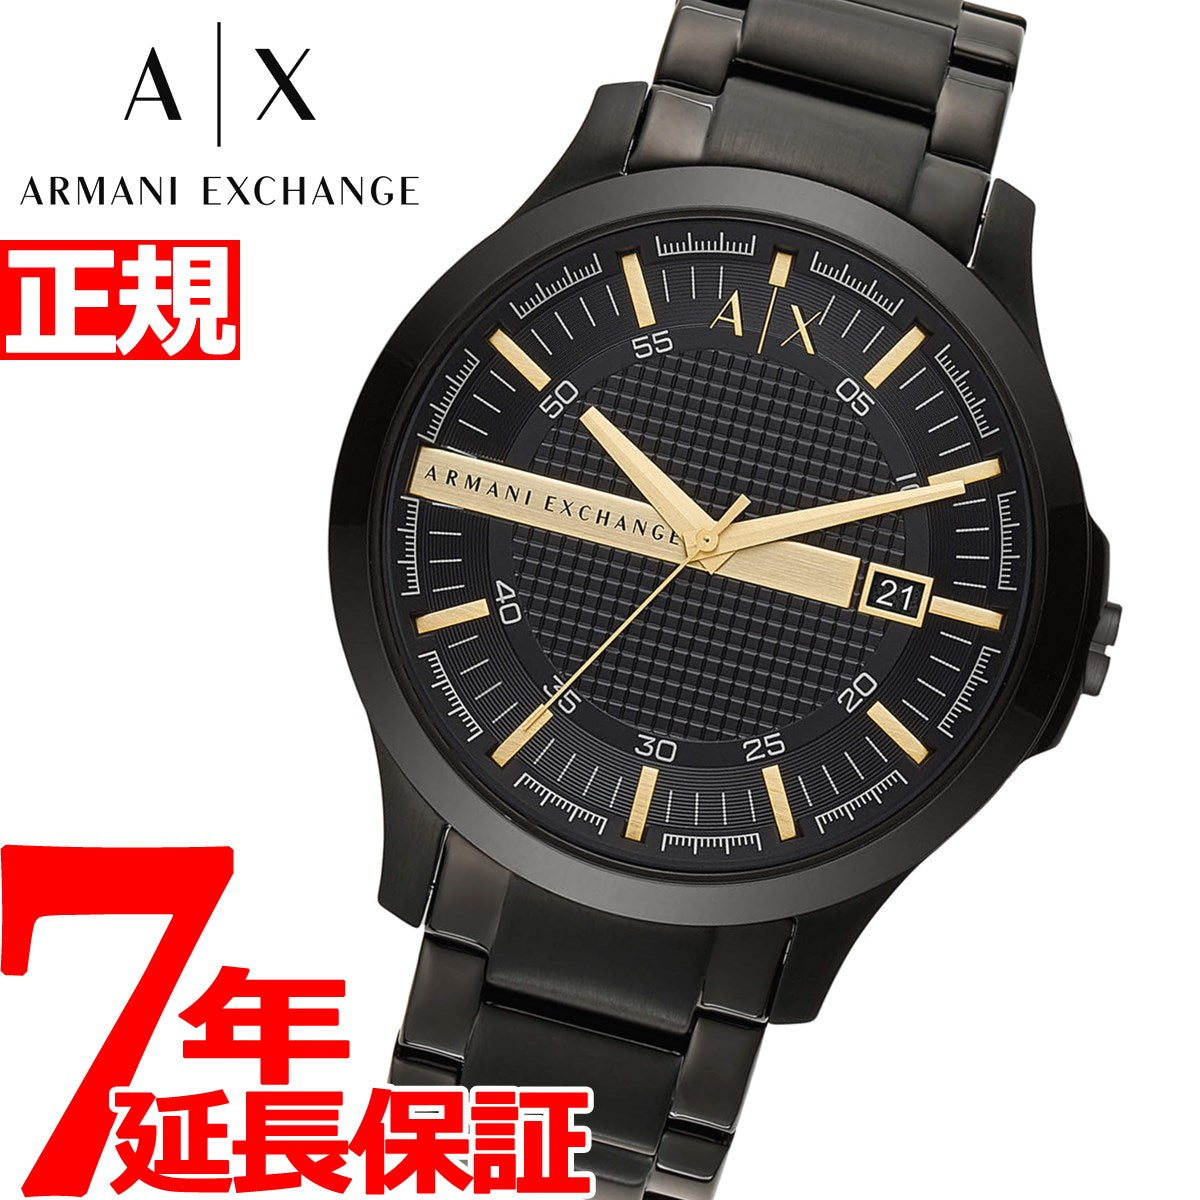 A|X アルマーニ エクスチェンジ ARMANI EXCHANGE 腕時計 メンズ